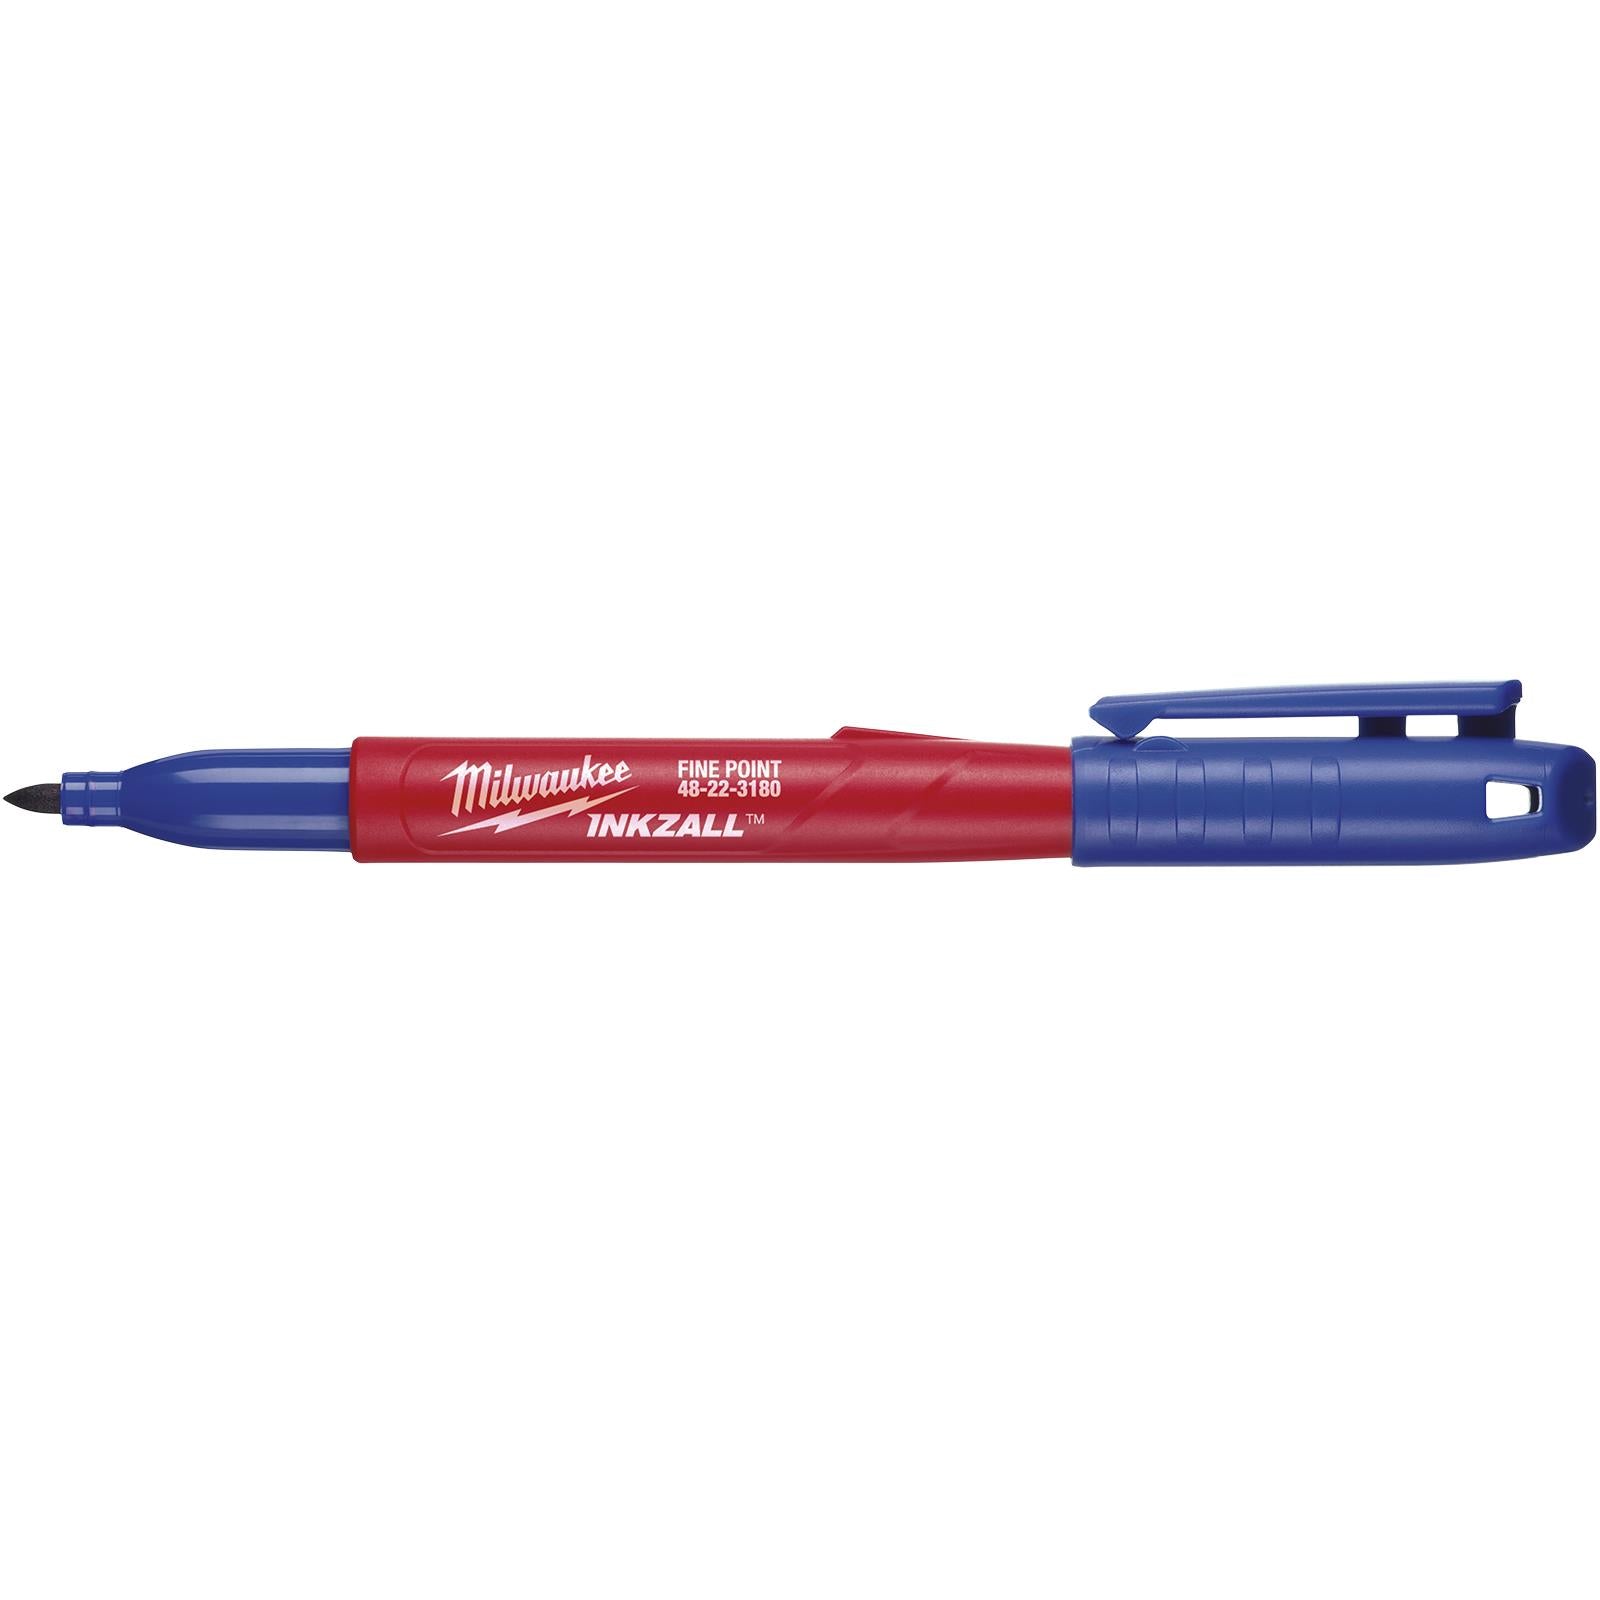 Milwaukee INKZALL Permanent Marker Pen Blue 1mm Tip